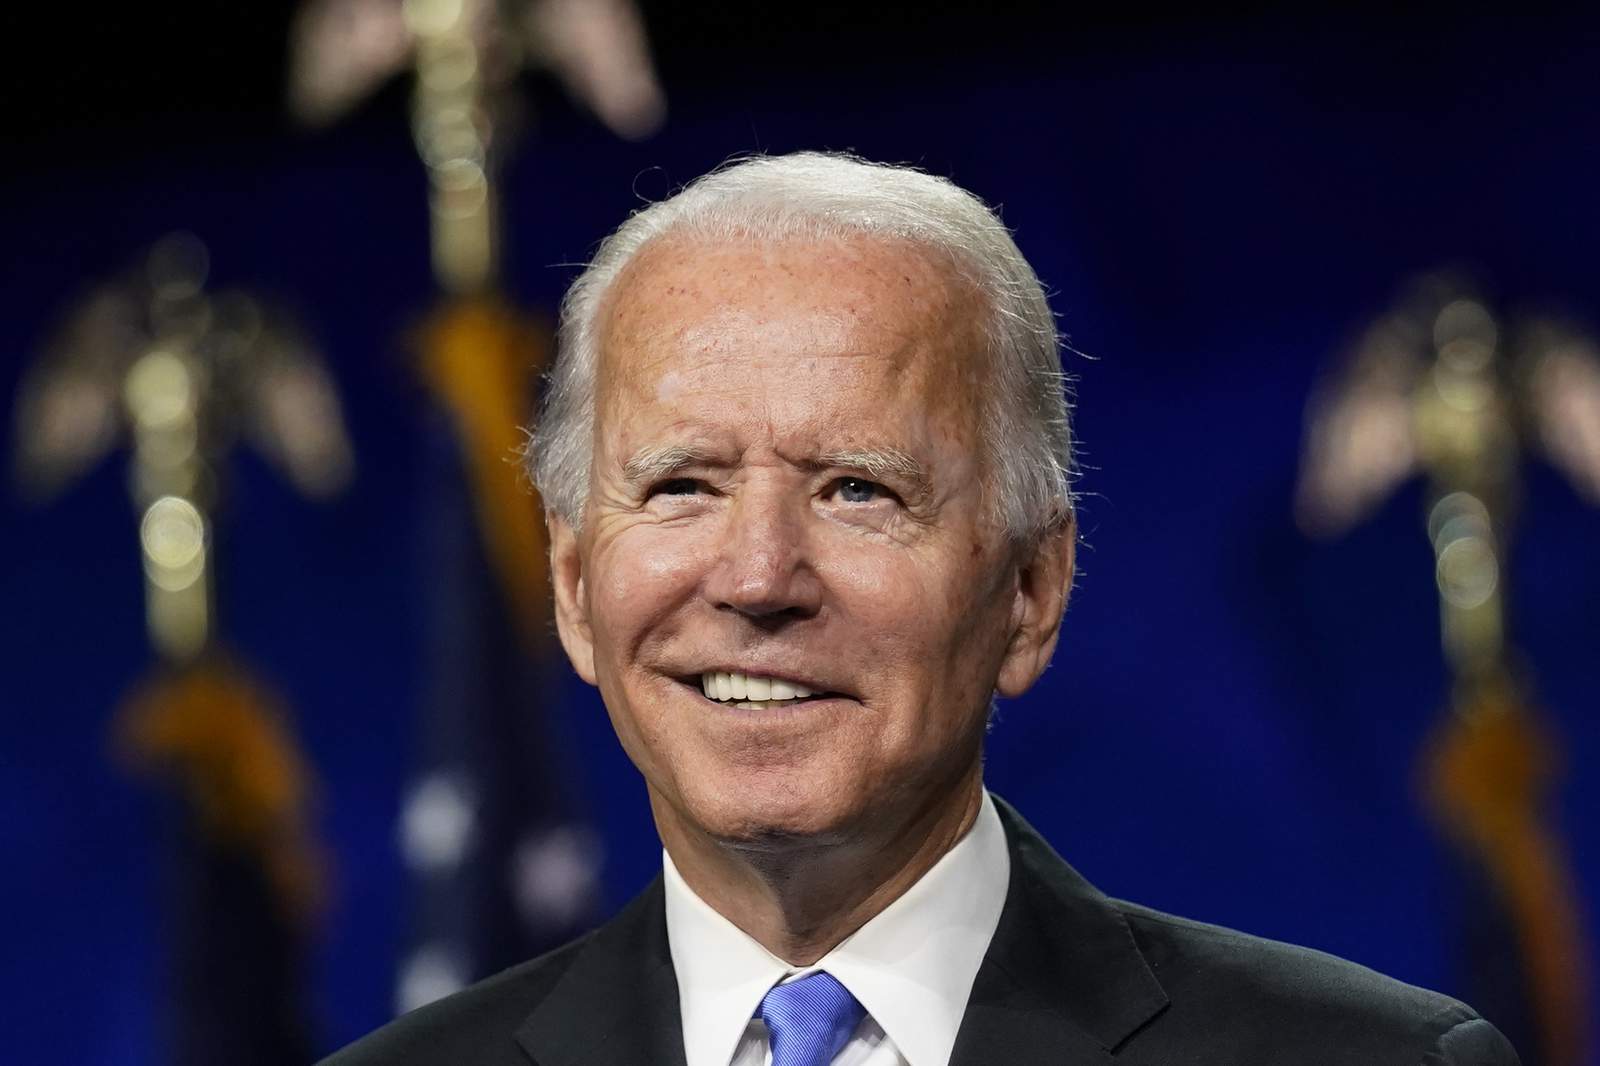 Biden, Harris prepare to travel more as campaign heats up